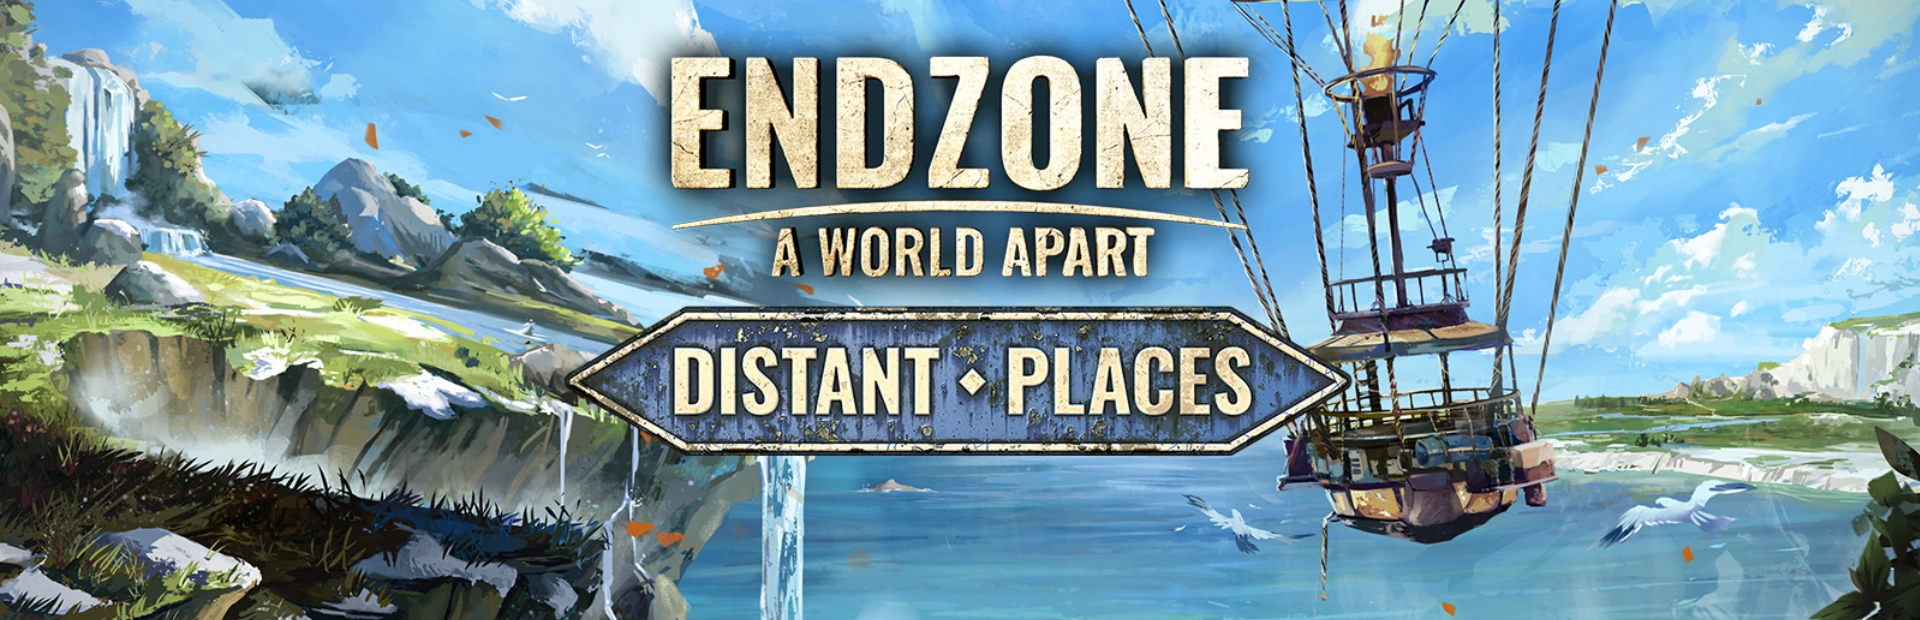 Endzone A.World .Apart Distant.Places.banner1